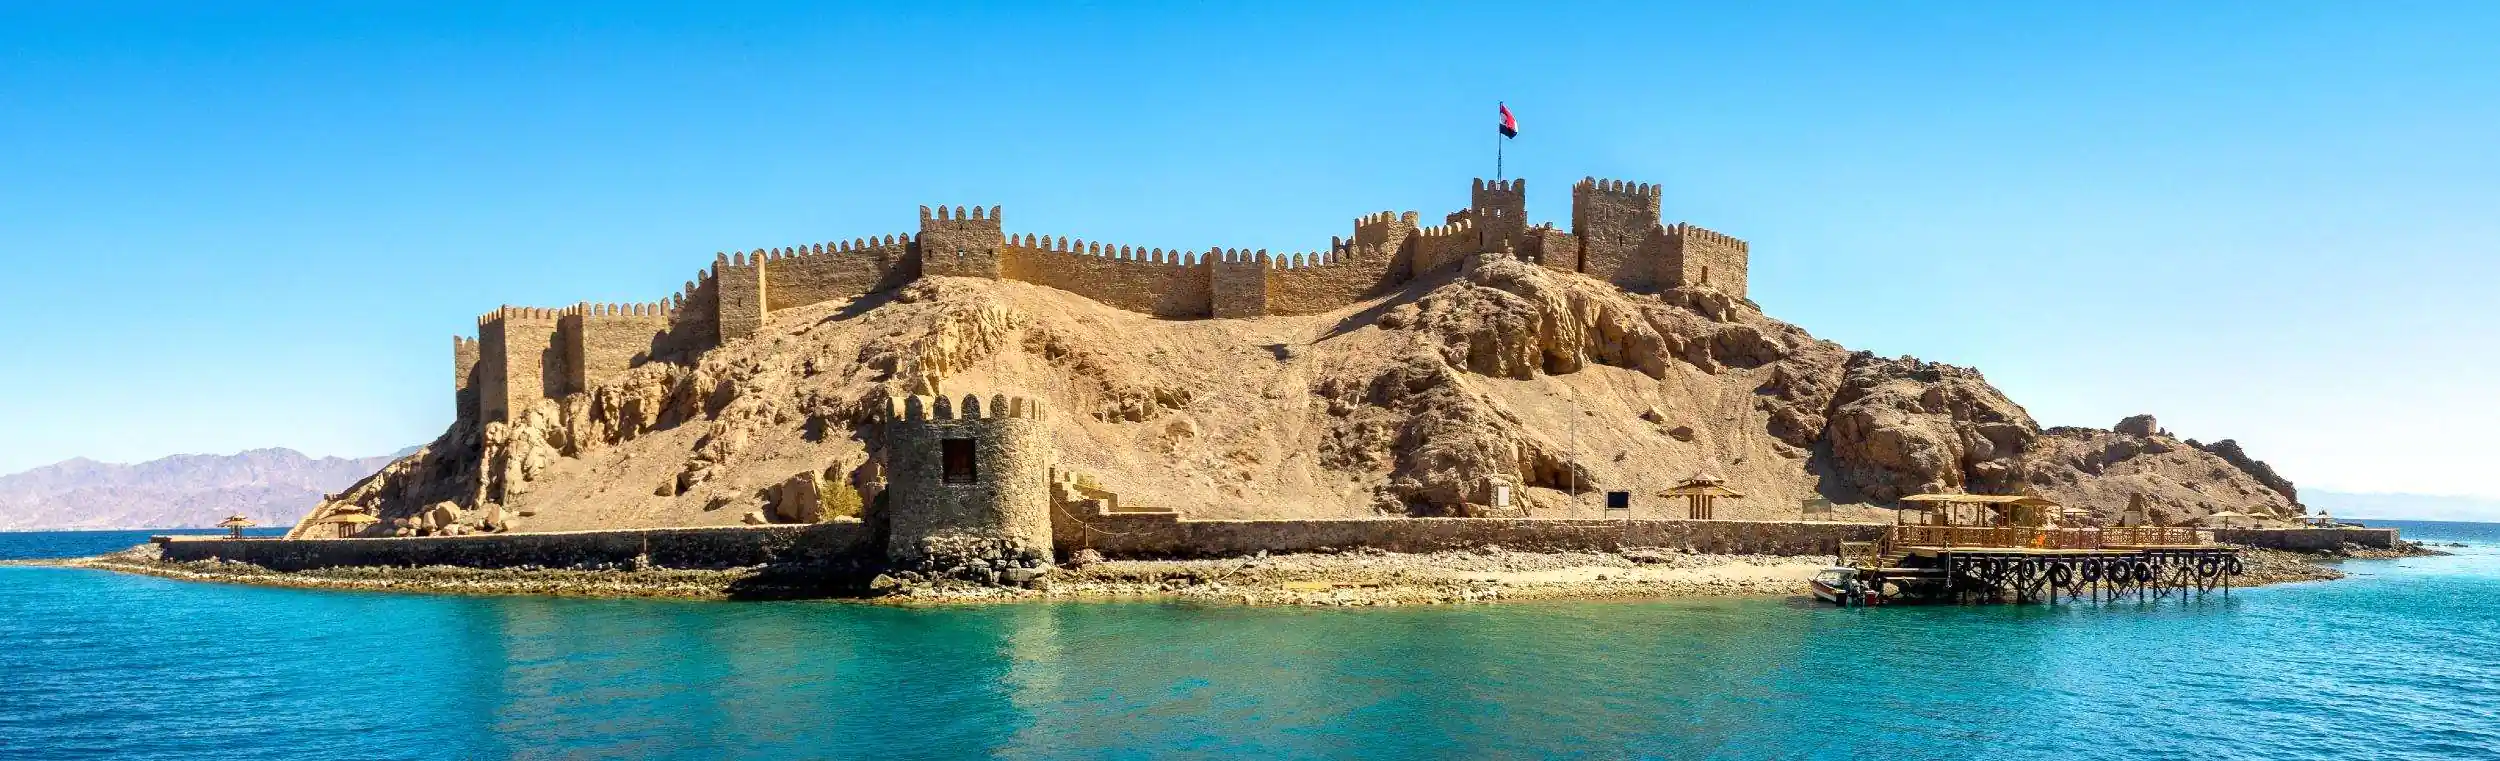 Крепость Саладина на острове Фараона в Табе